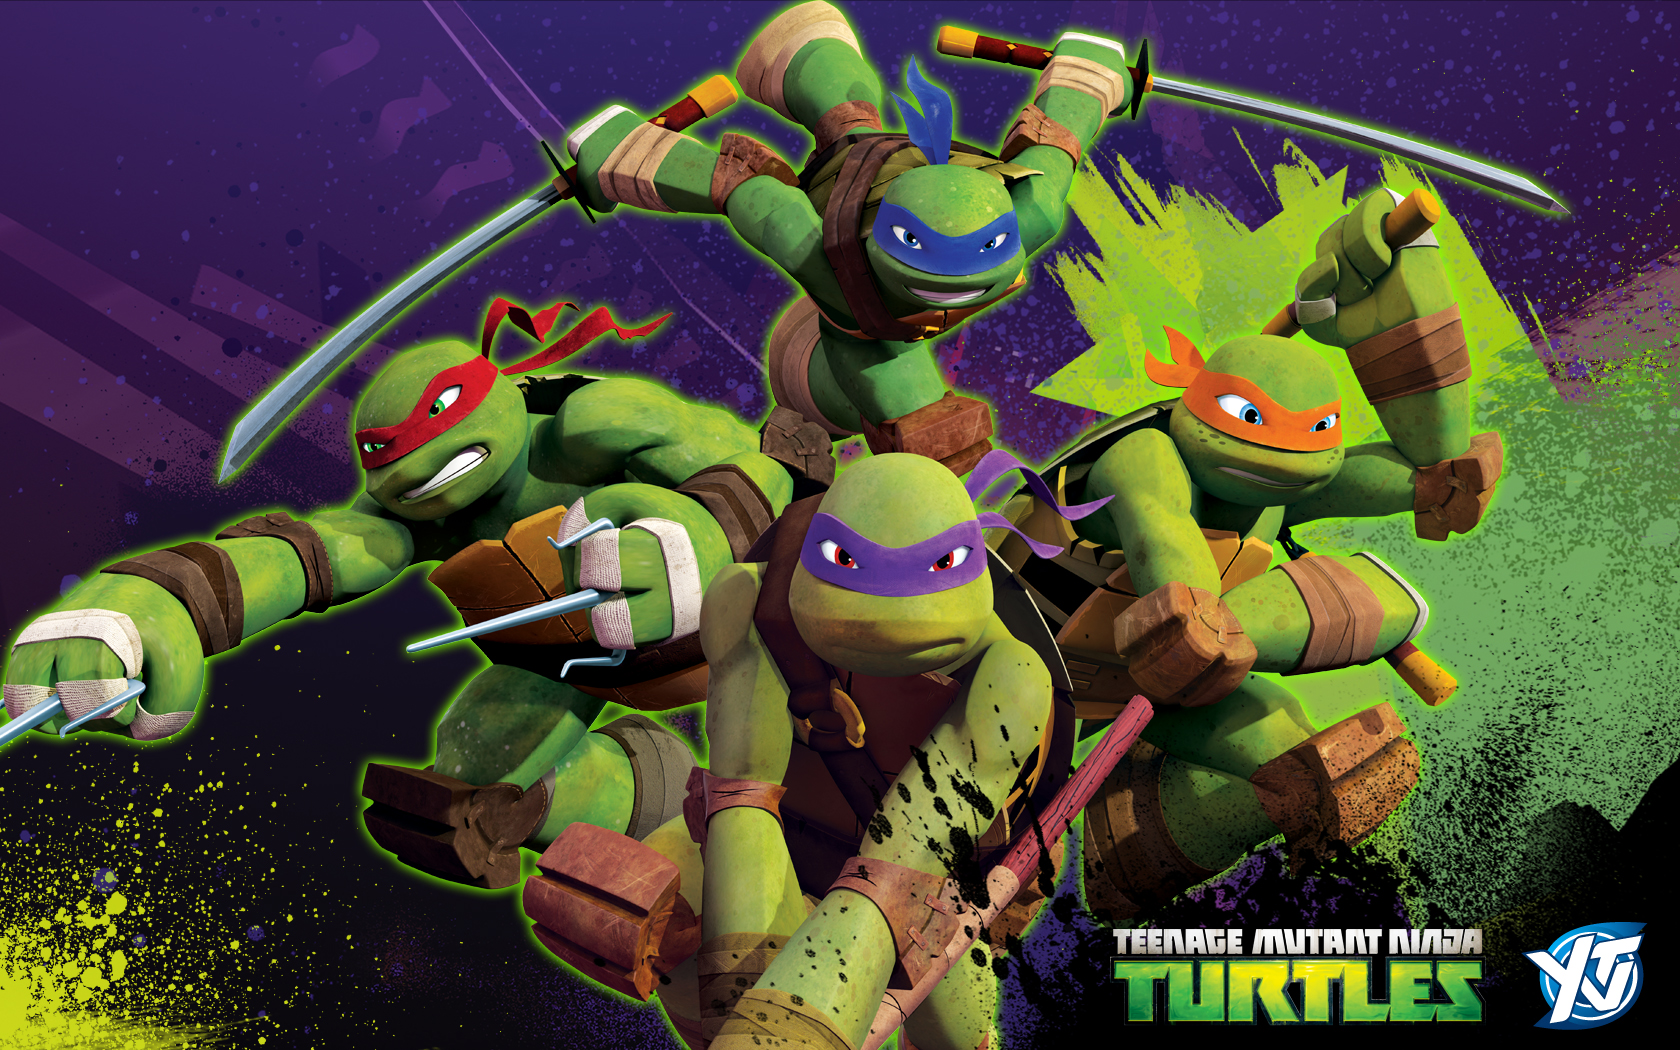 Ninja Turtles Wallpaper